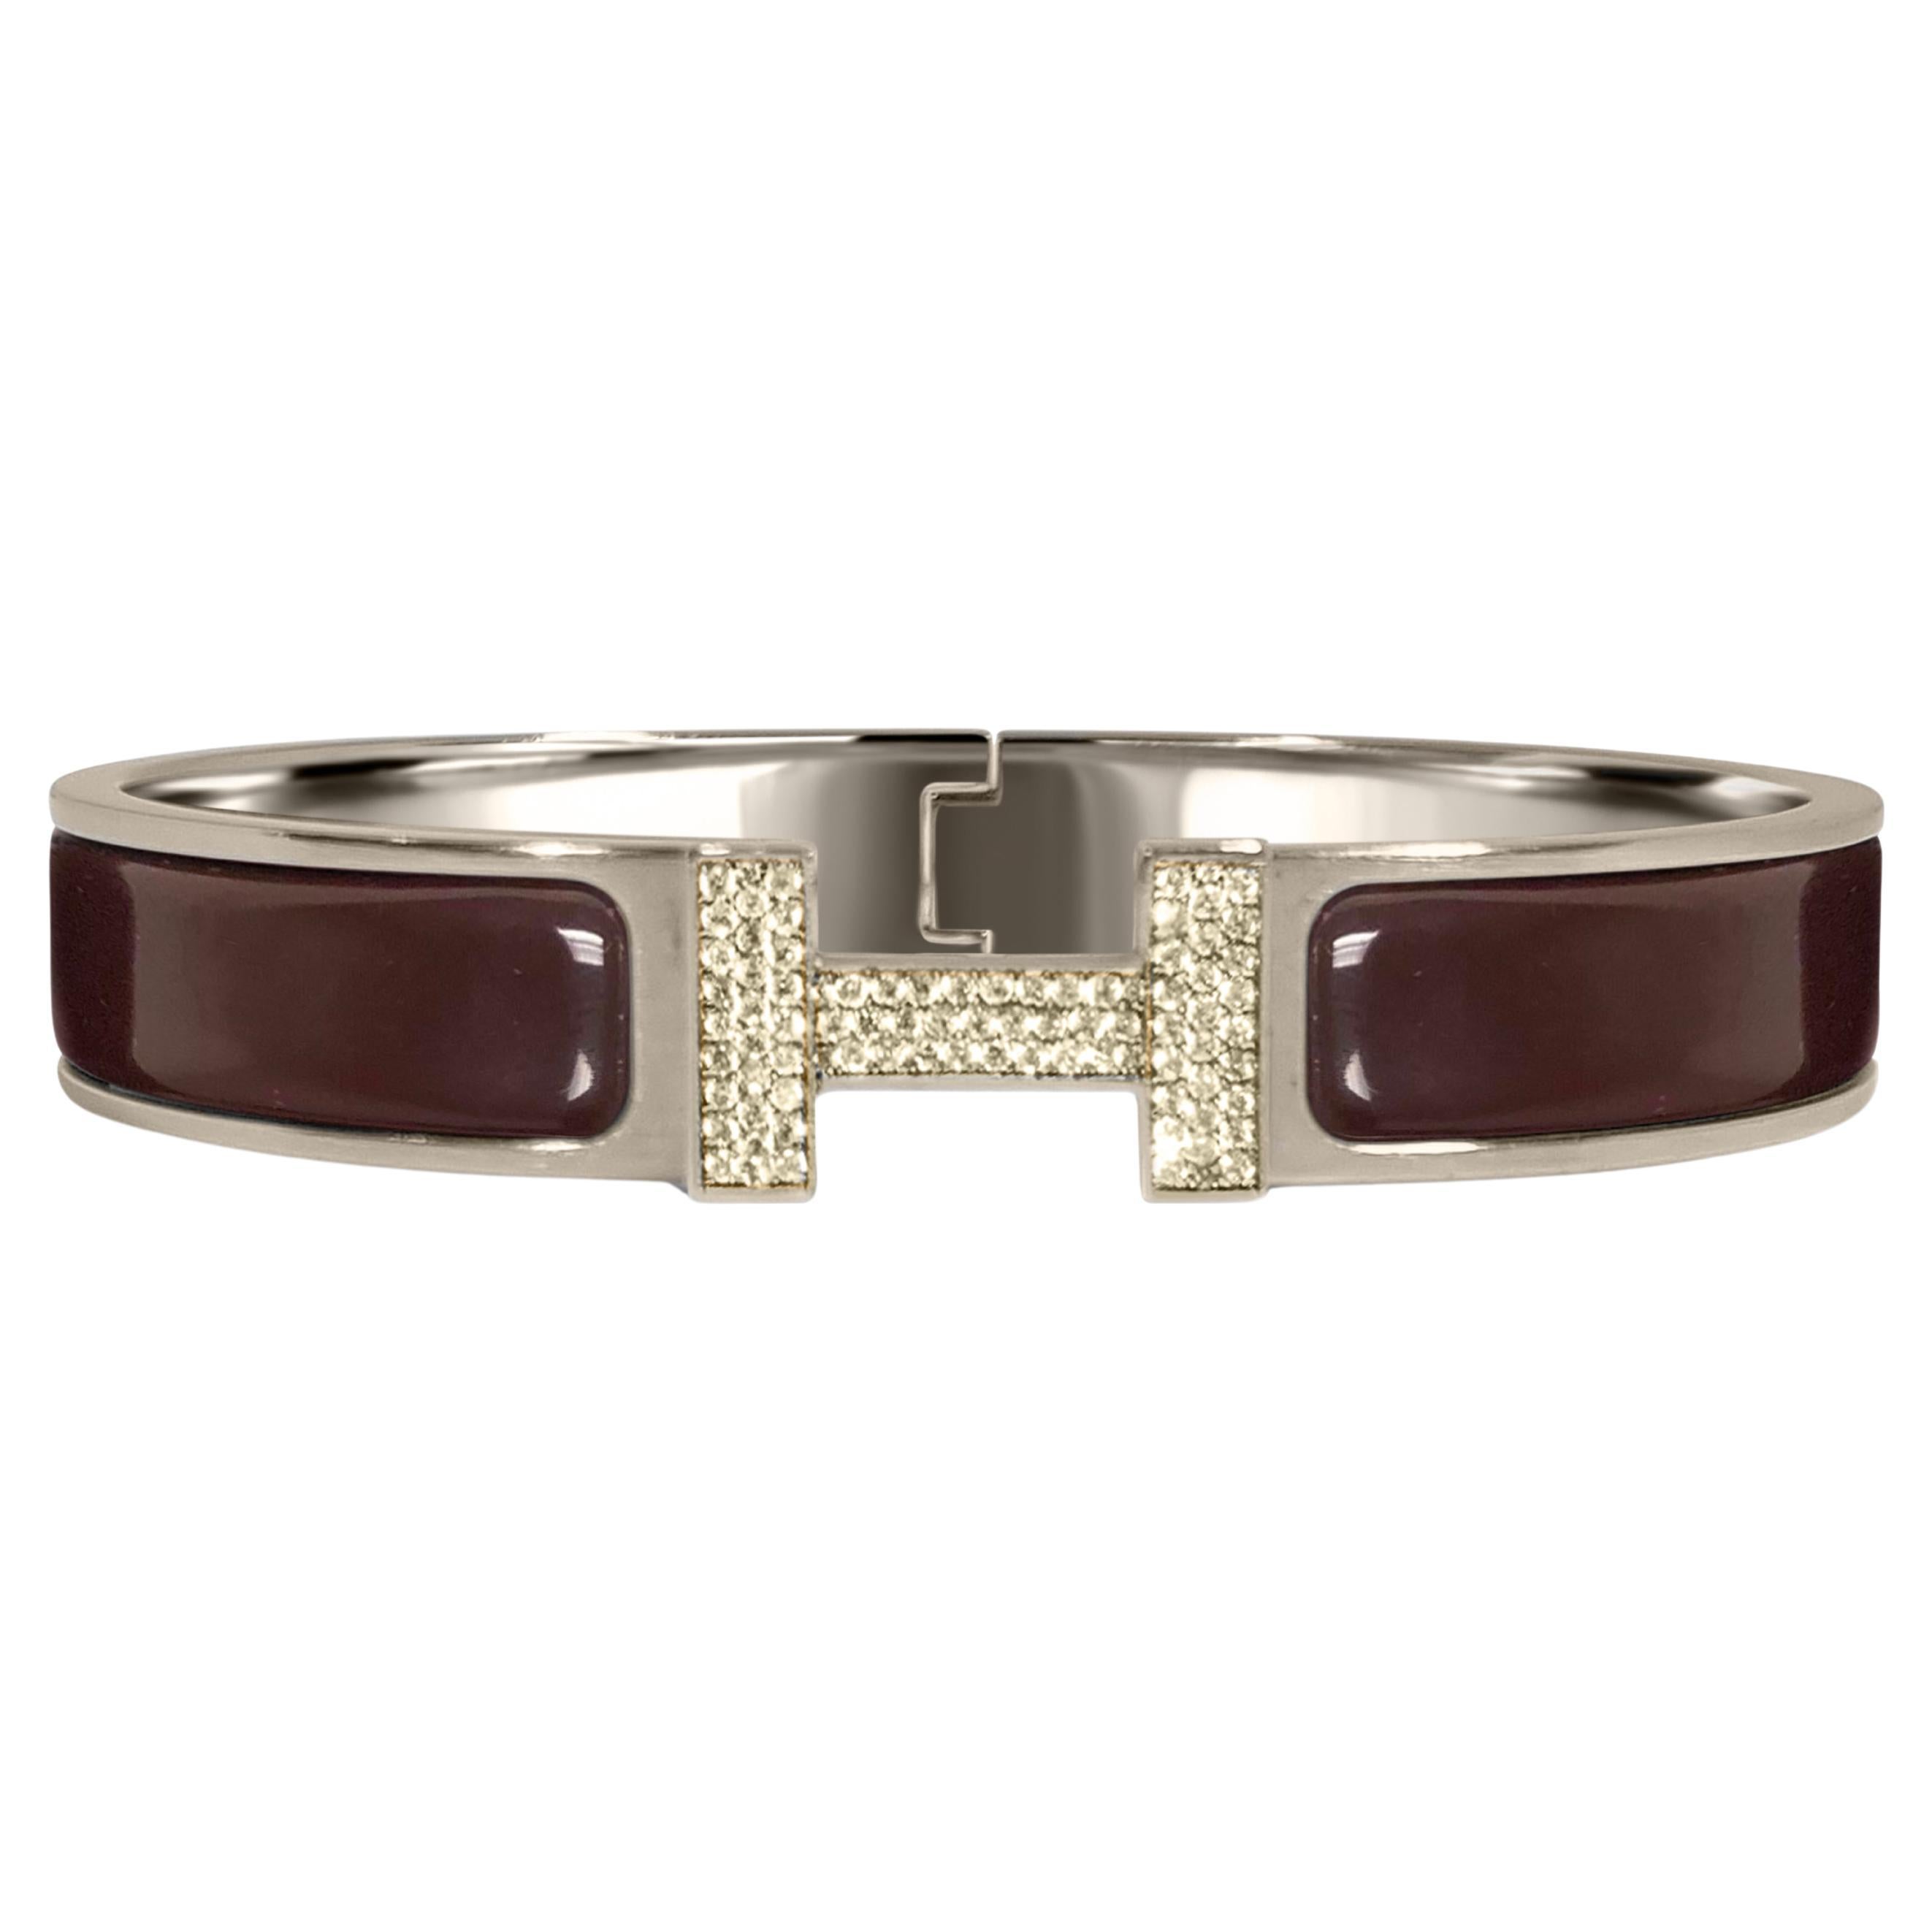 What are Hermès ​​enamel bracelets made of?